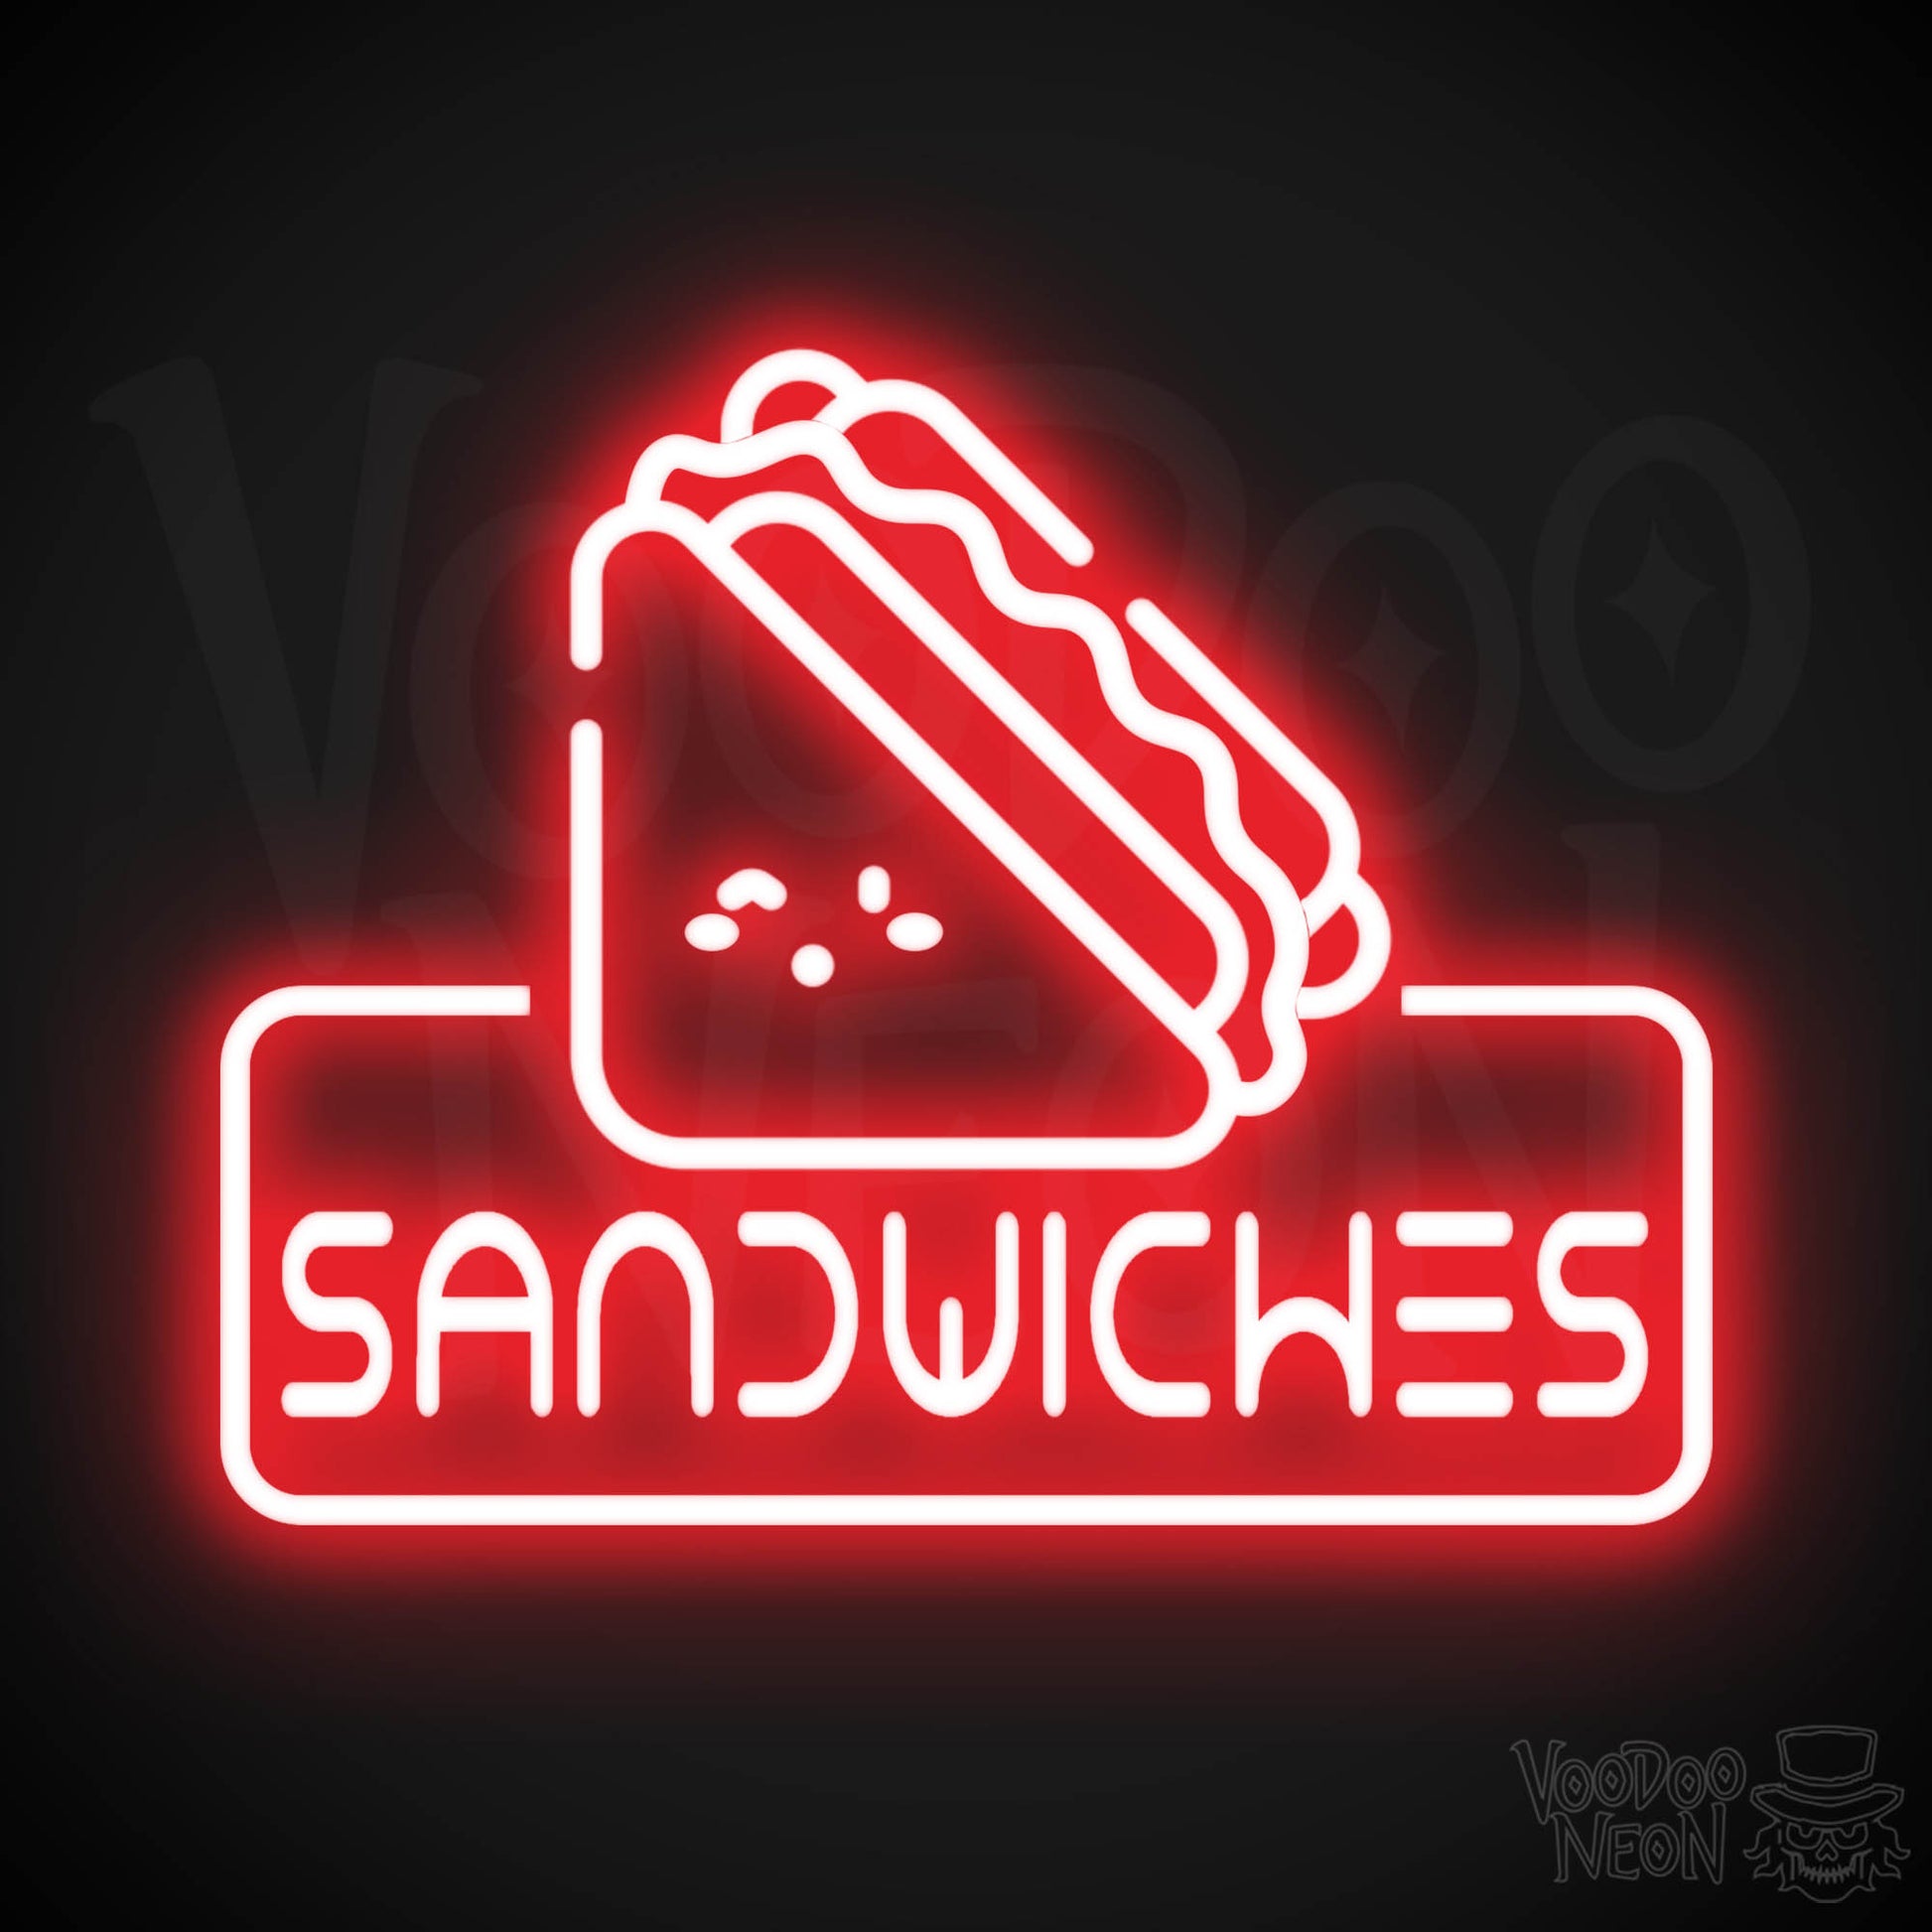 Neon Sandwiches Sign - Sandwich Neon Sign - Neon Sandwich Shop Sign - Color Red